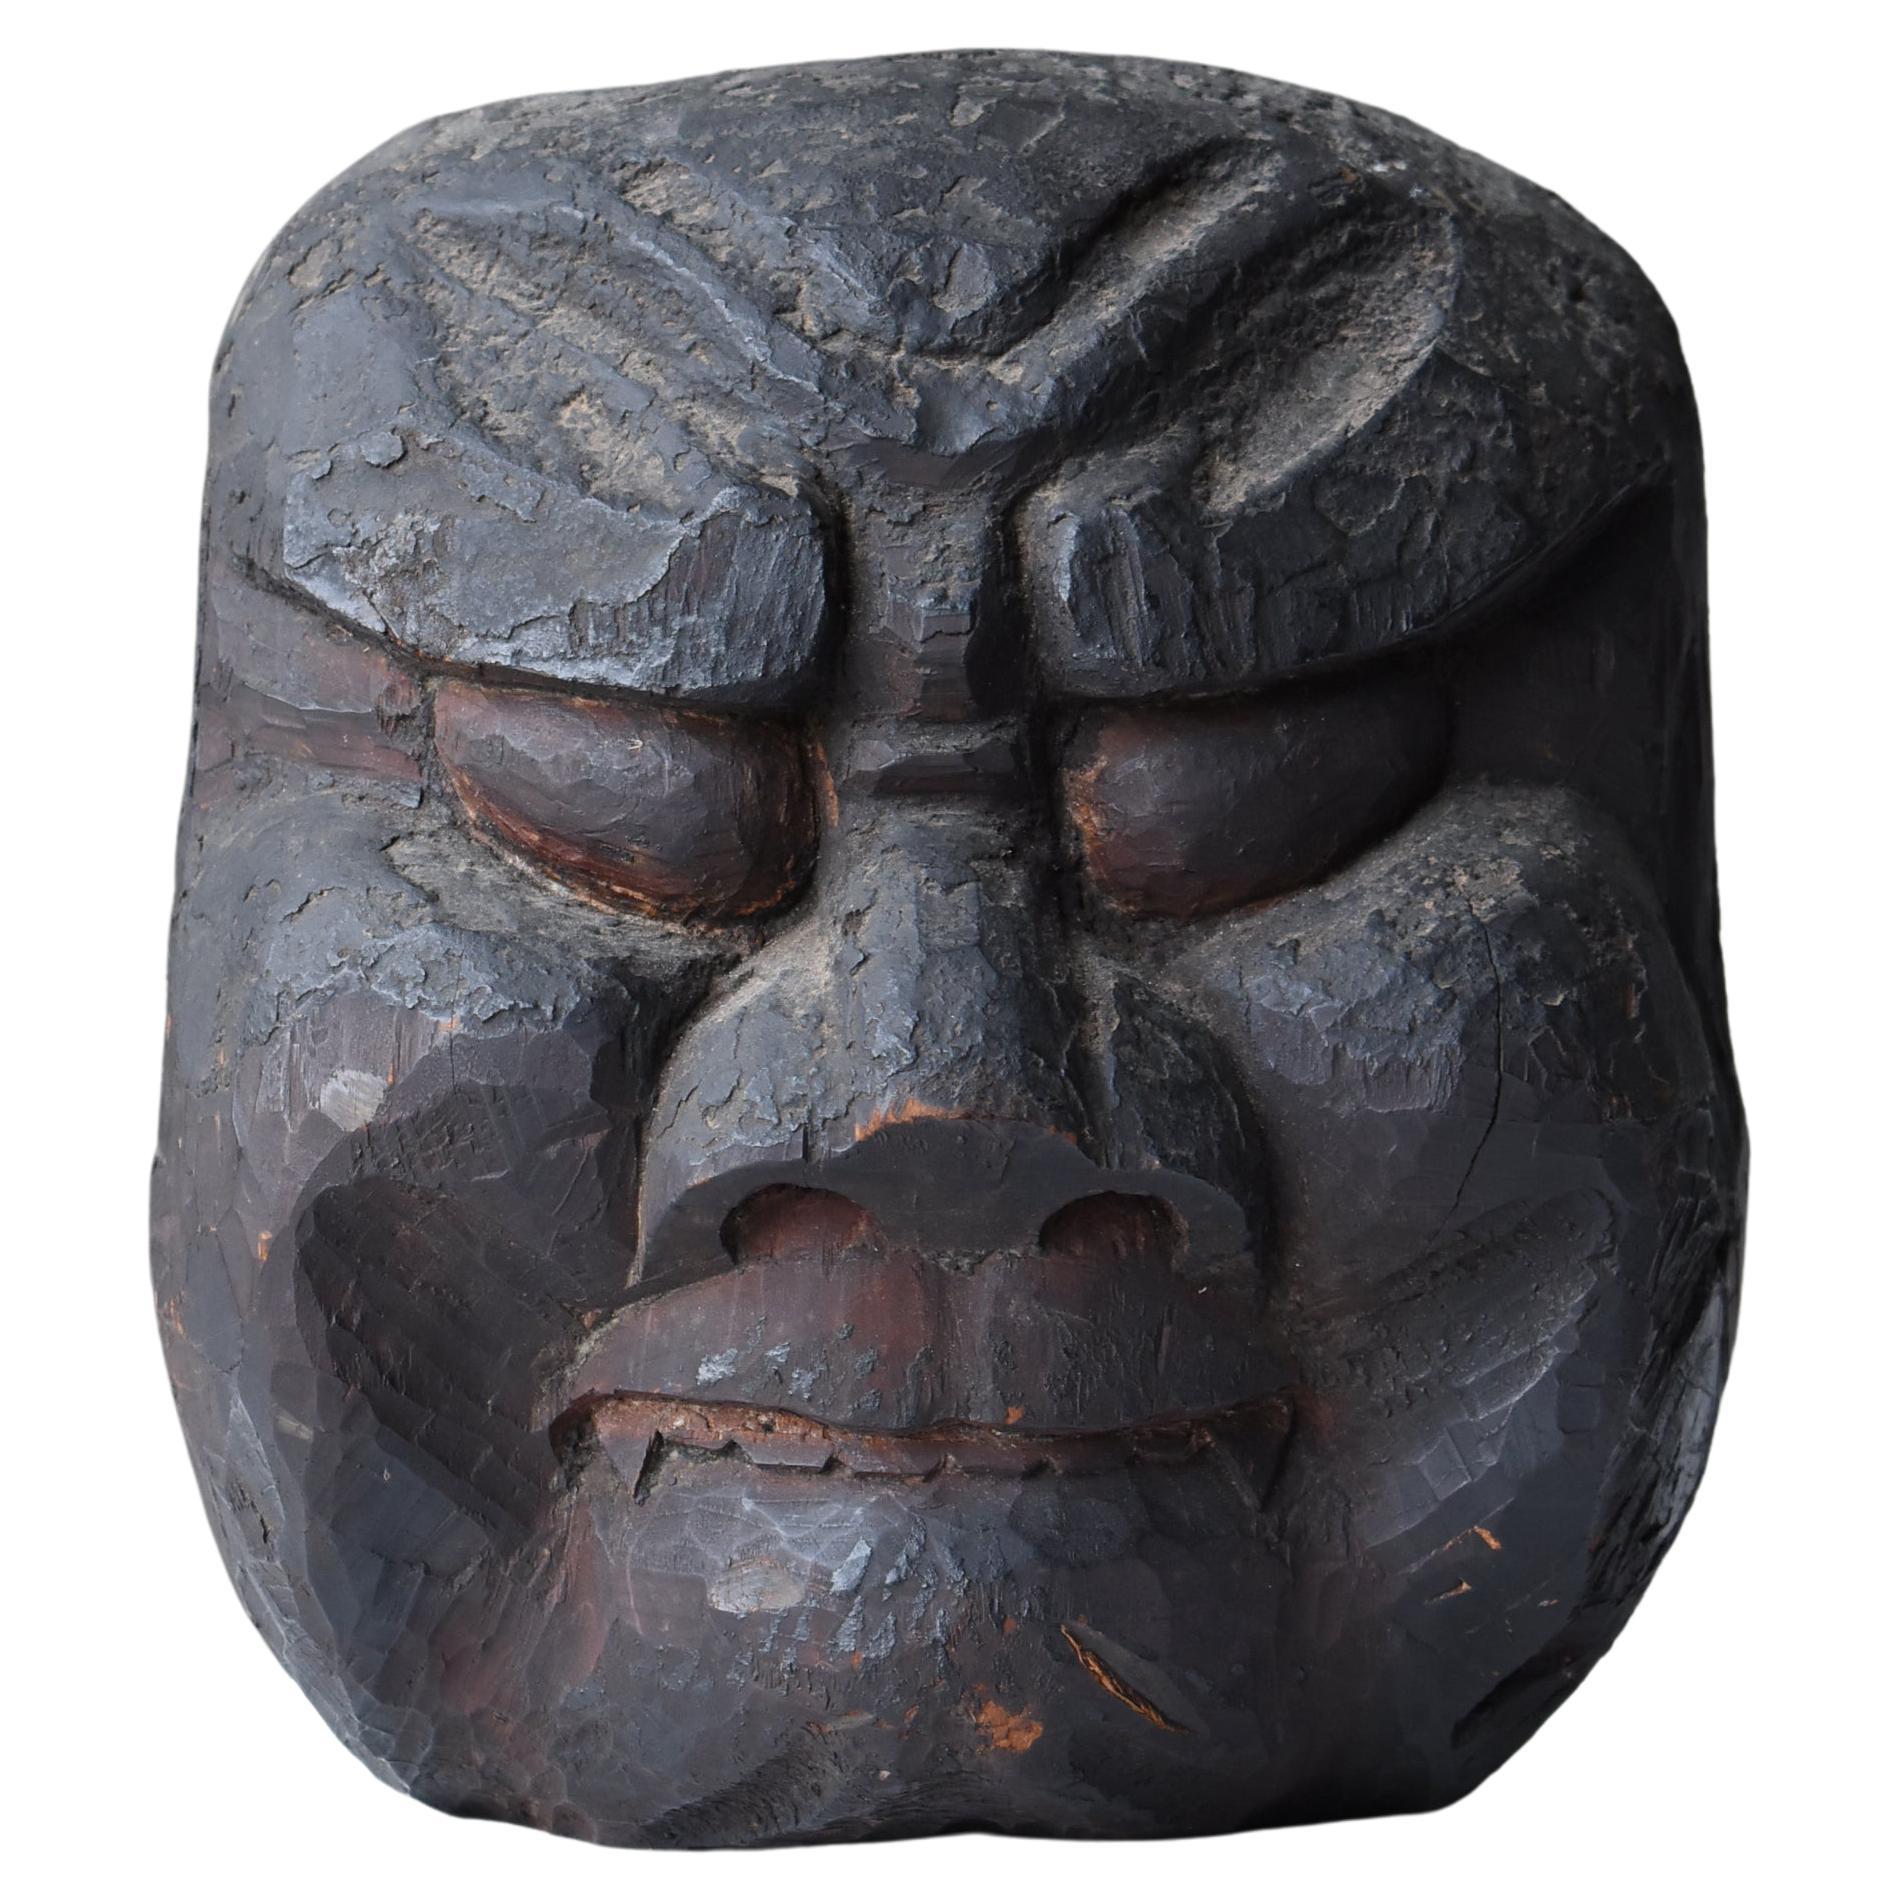 Japanese Antique Wooden Mask 1800s-1860s / Mingei Wabi Sabi Sculpture Folk Art For Sale